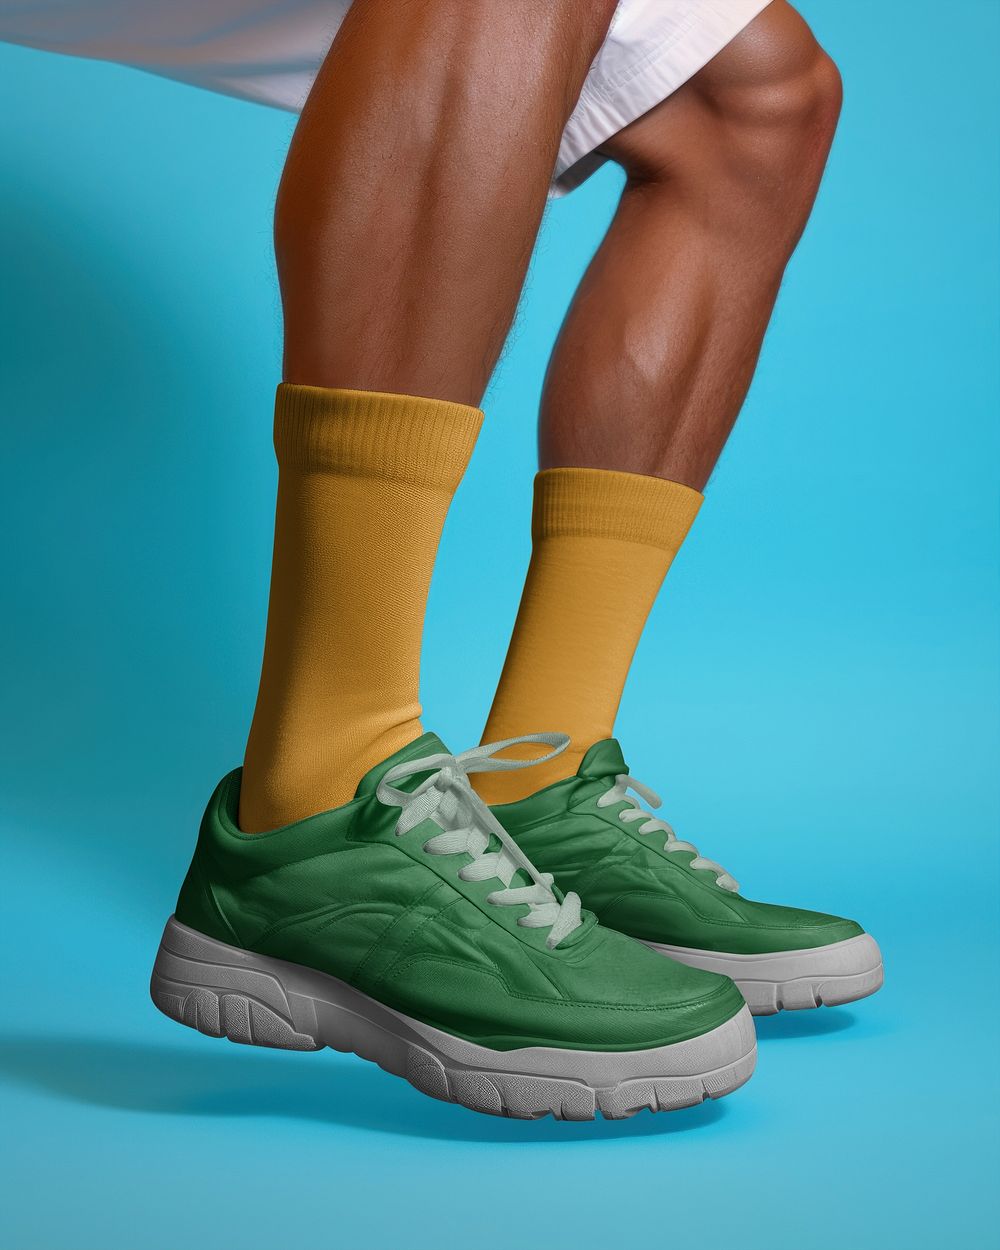 Men's green sneakers, footwear